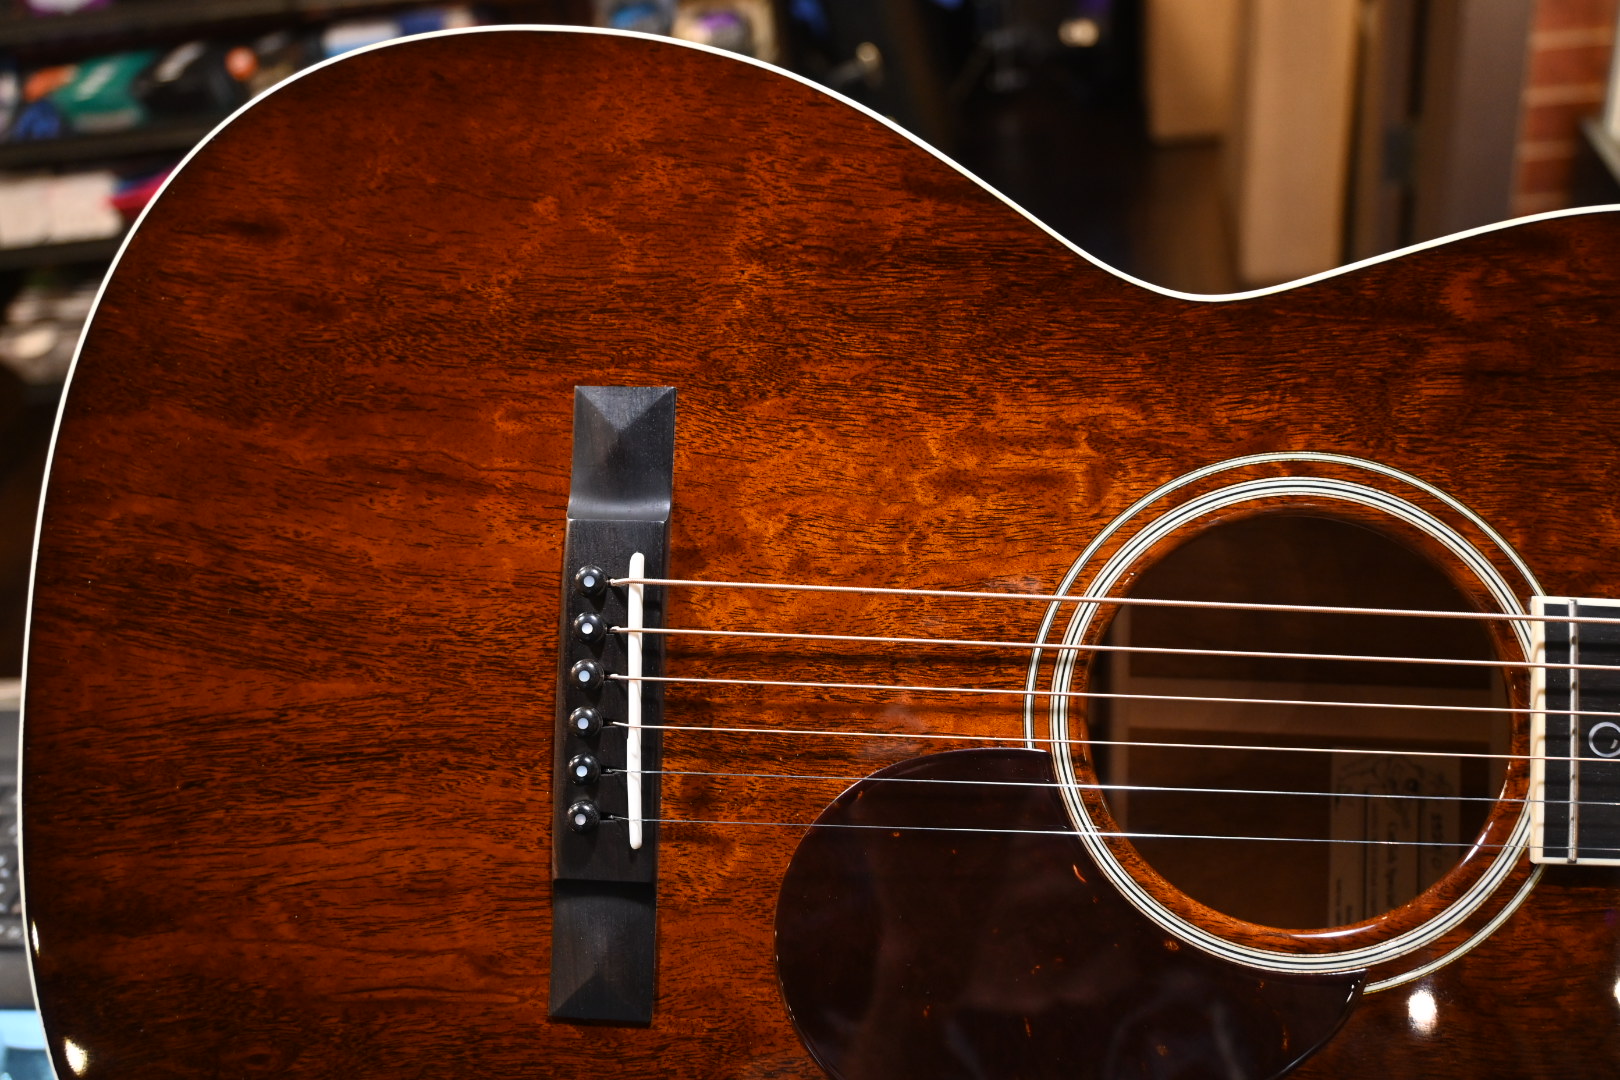 Santa Cruz Catfish Special Pro Figured Mahogany Guitar #403 - Danville Music